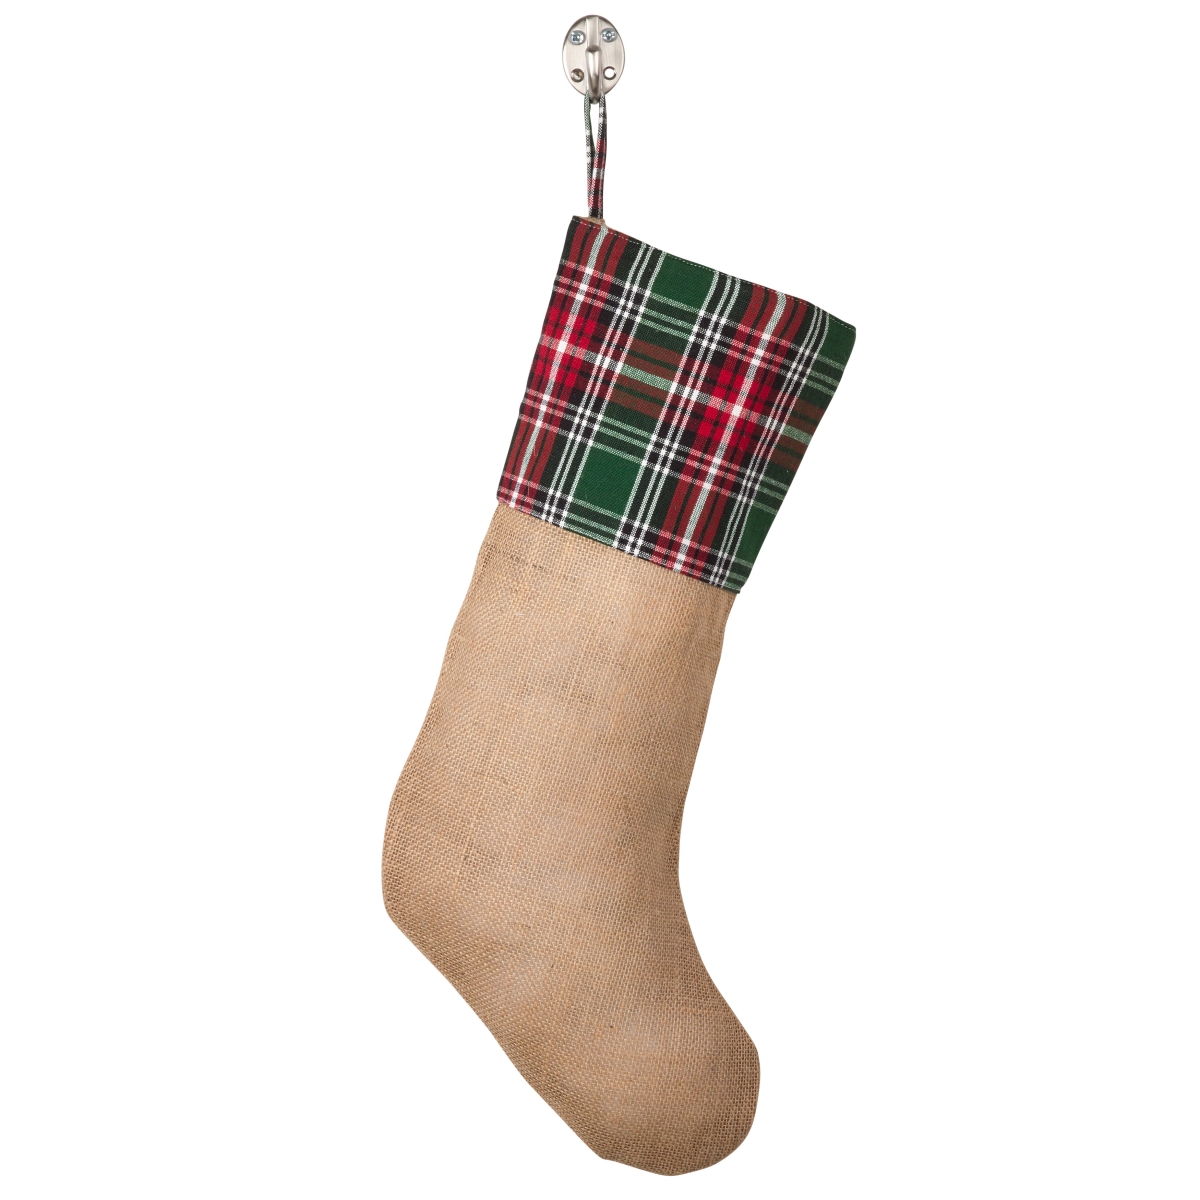 1216.m1319 13 X 19 In. Edinburgh Plaid Design Holiday Jute Cotton Christmas Stocking, Multi Color